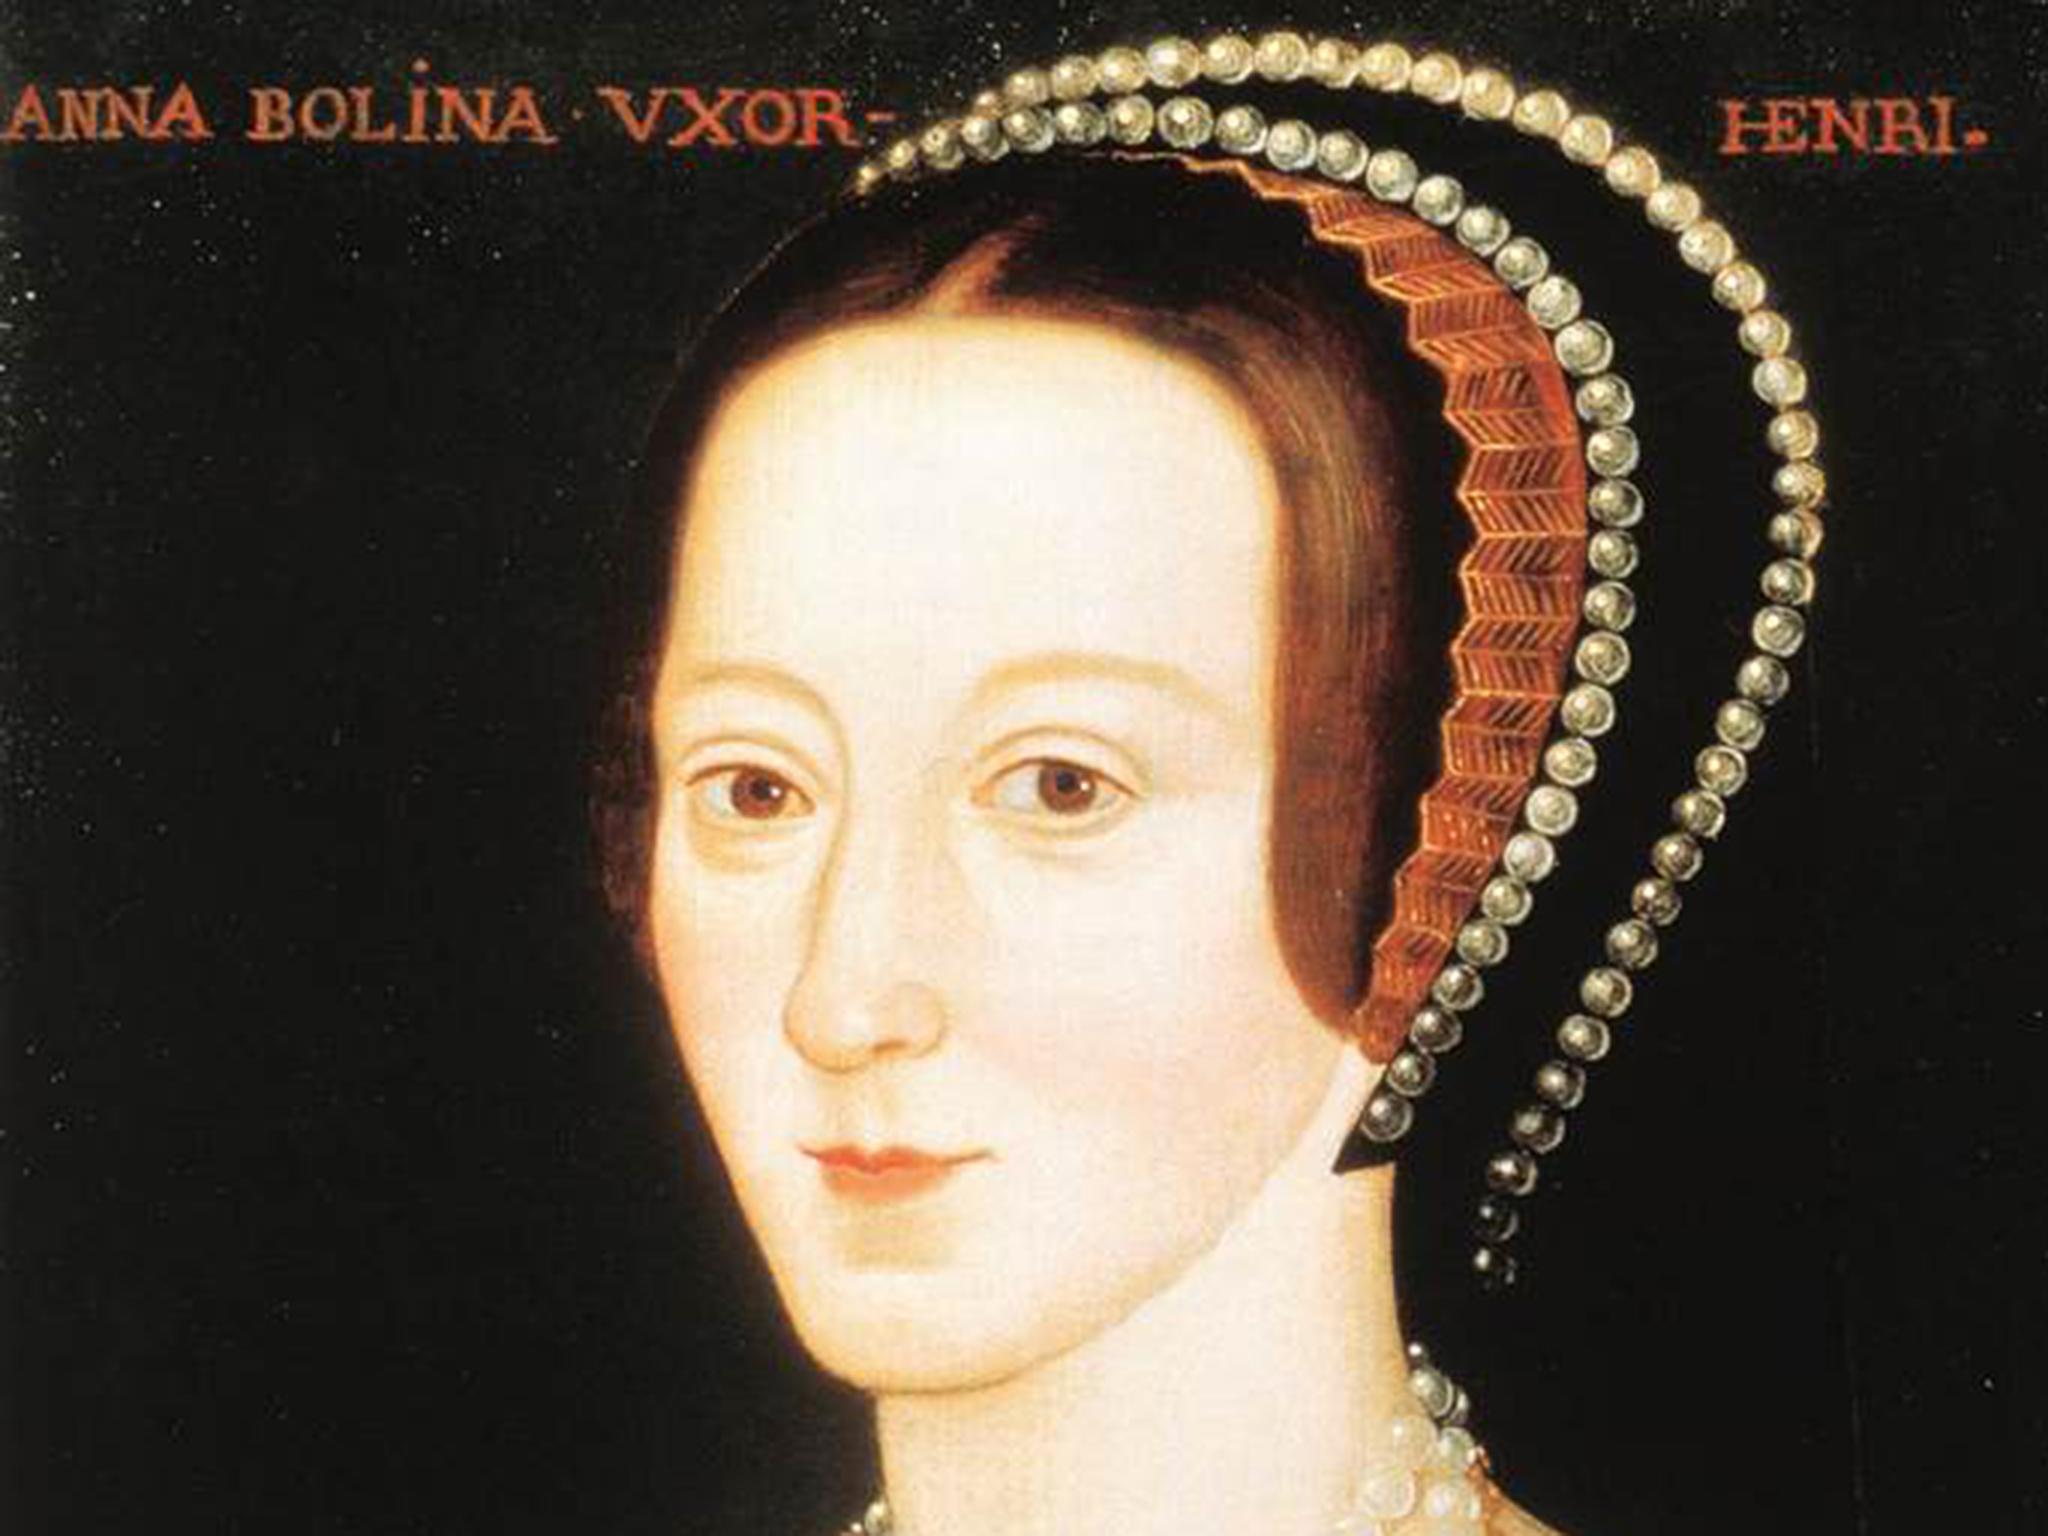 Anne Boleyn was executed with a single stroke in 1536